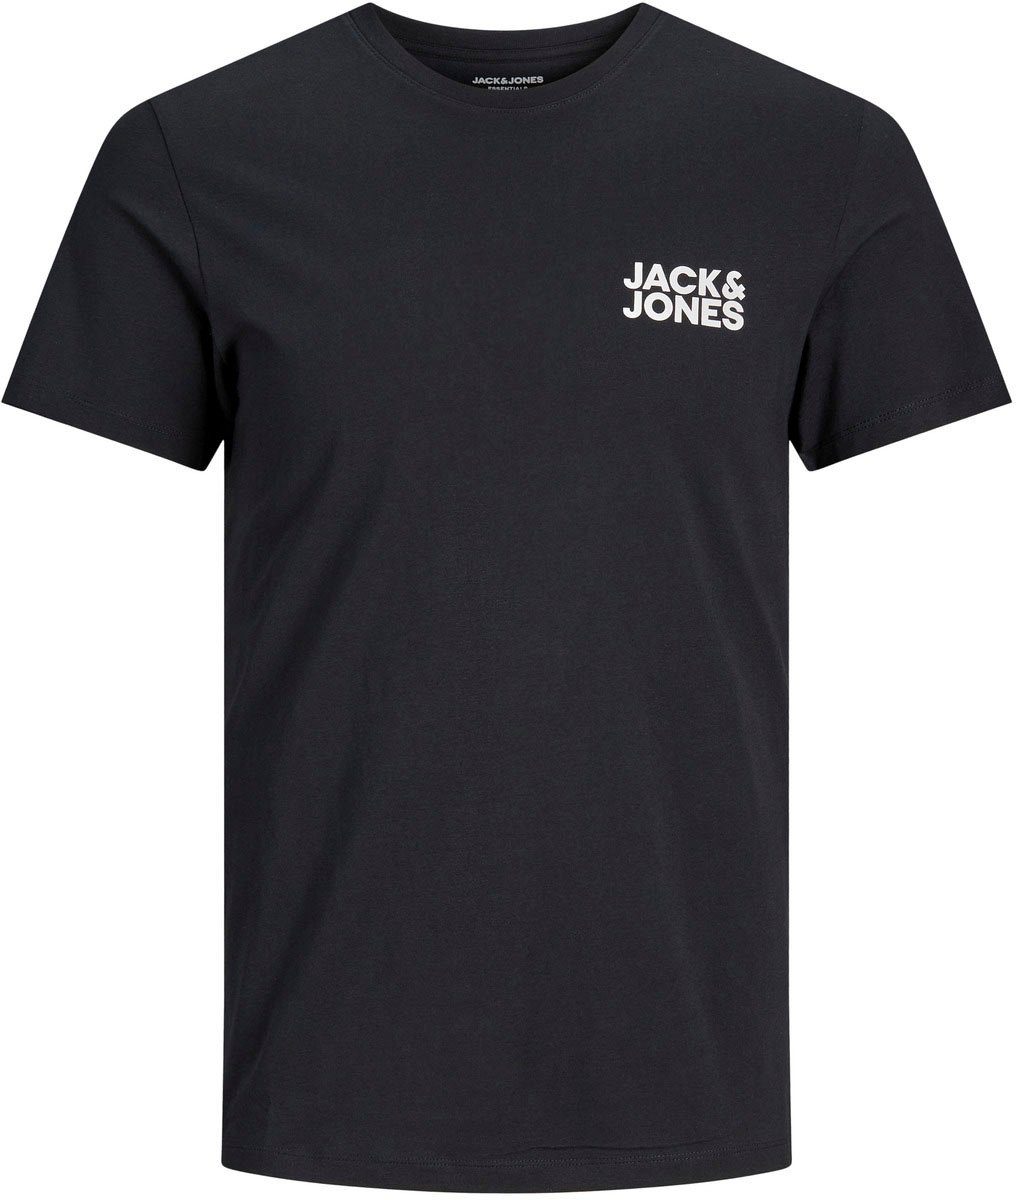 LOGO CORP Jones mit Logoprint & TEE schwarz Jack T-Shirt